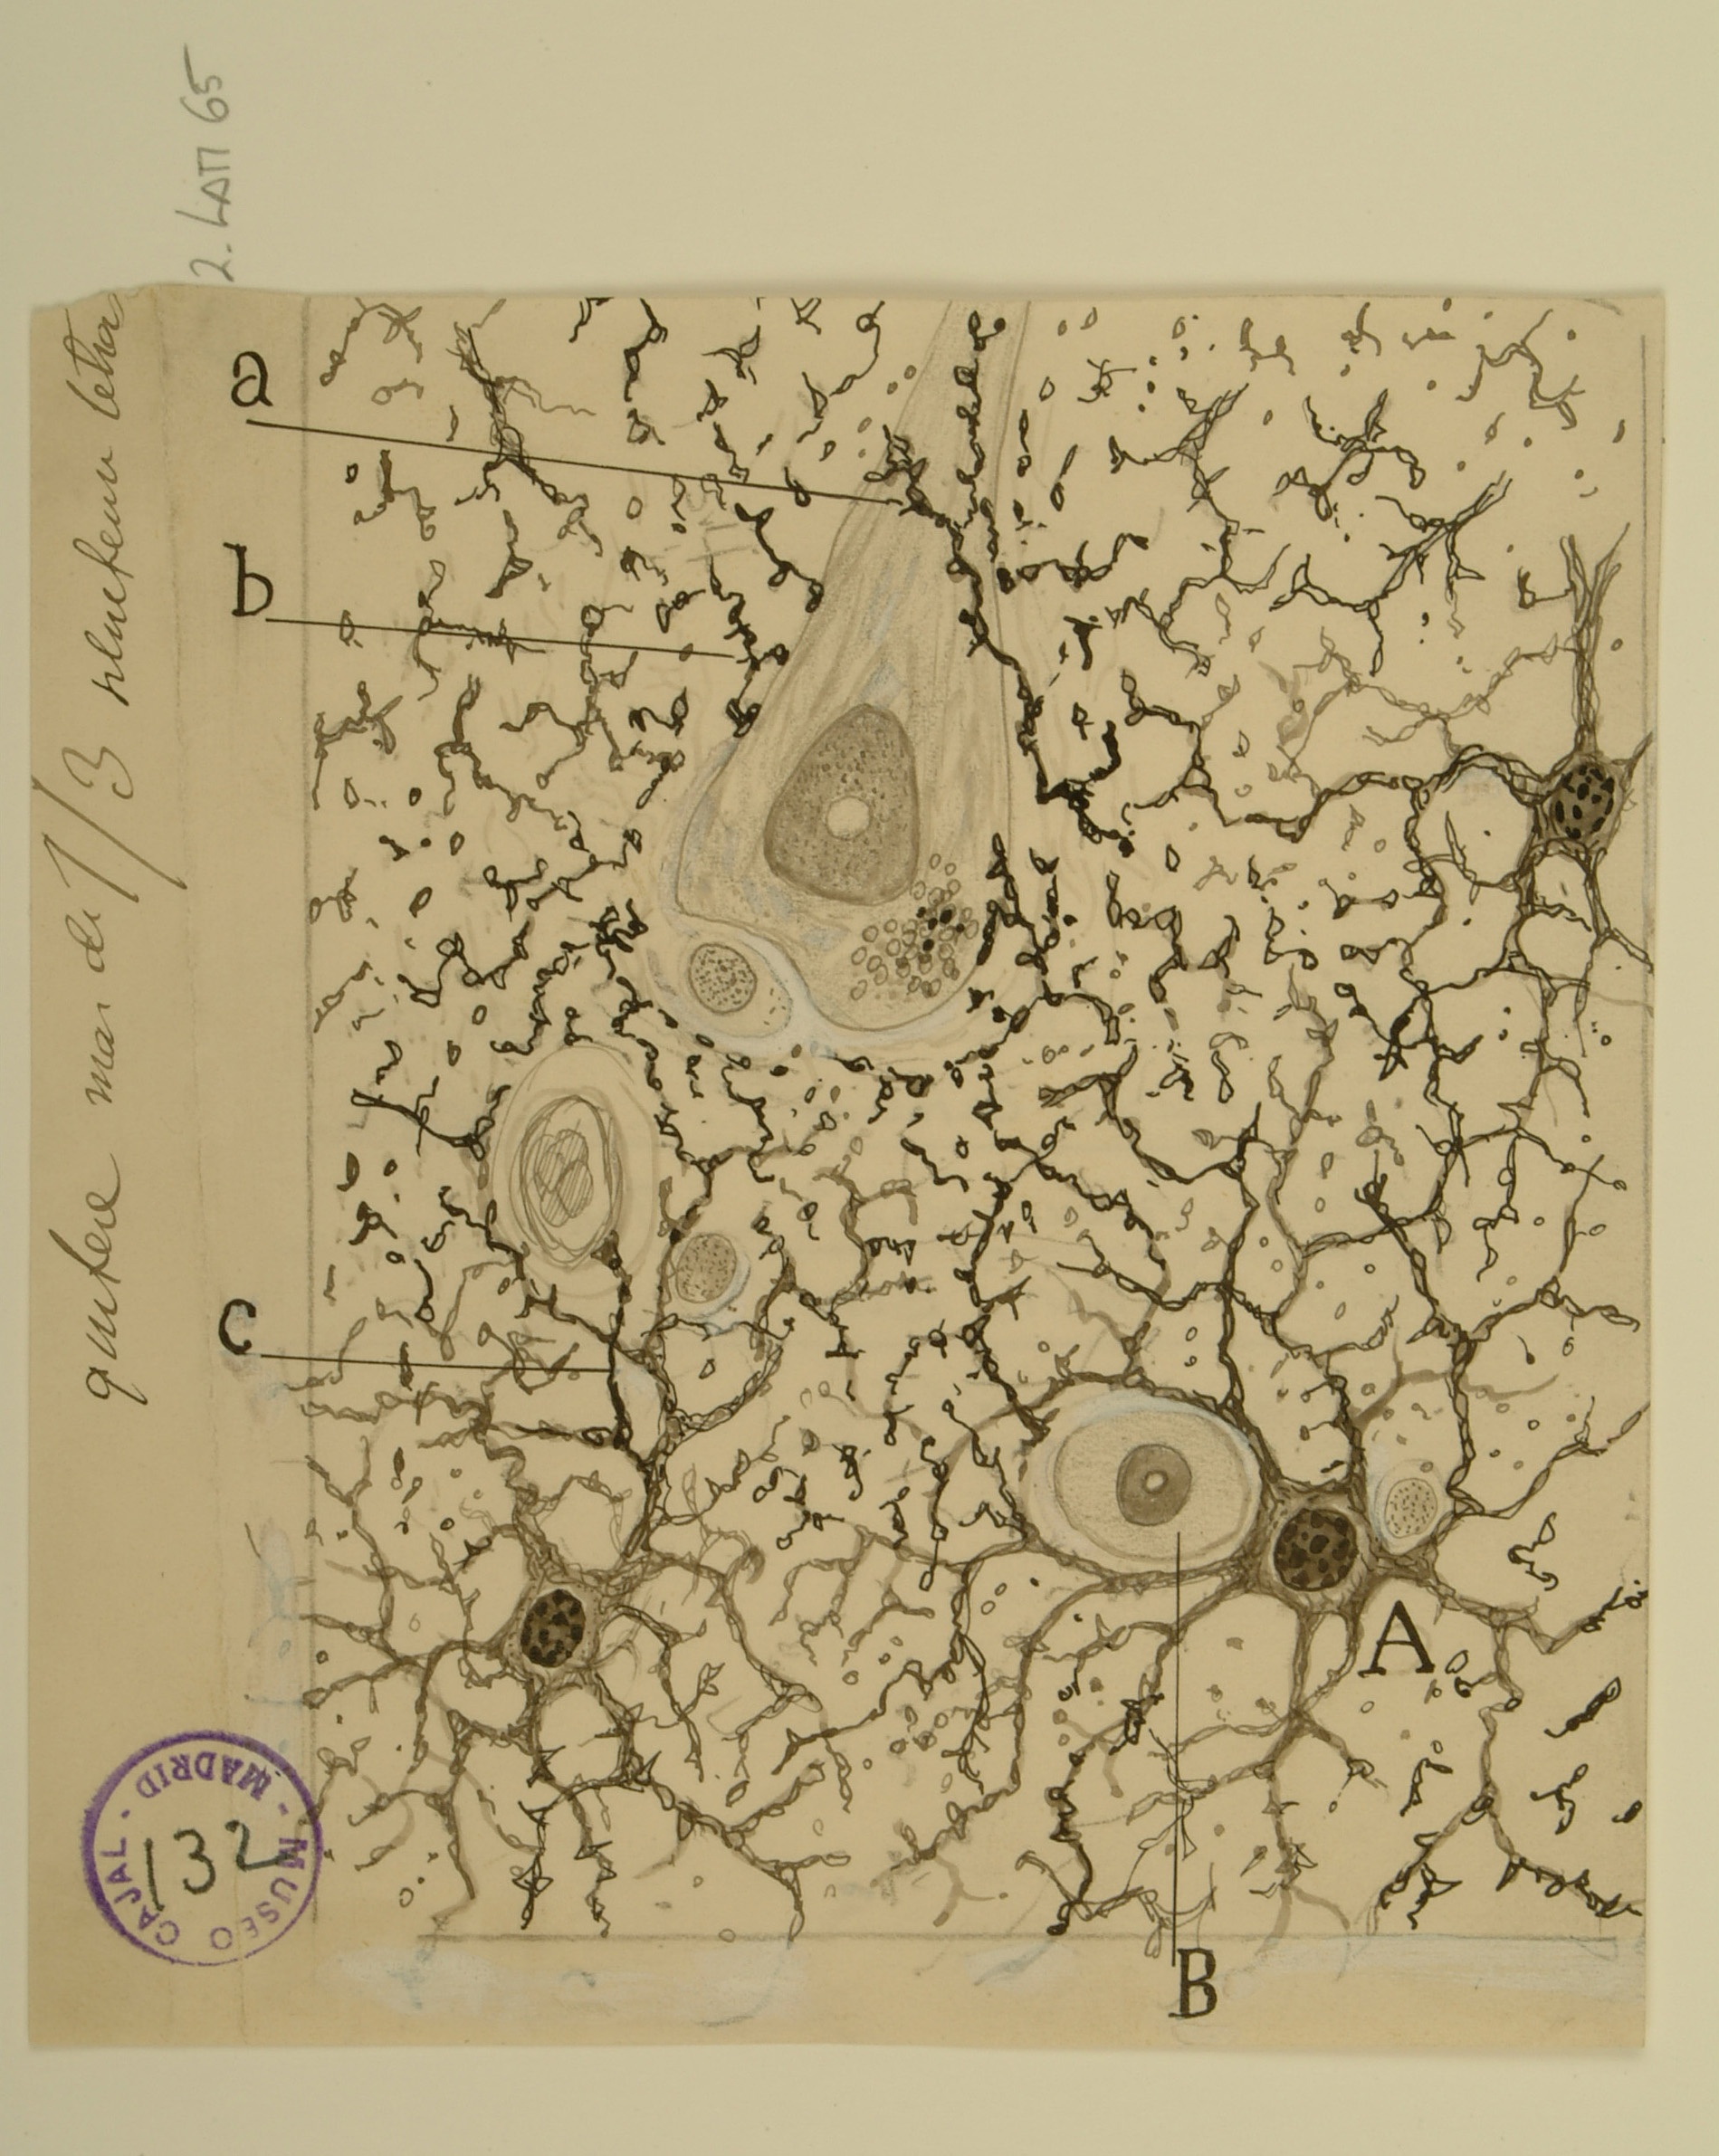 Hand-drawn illustration of Astrocytes